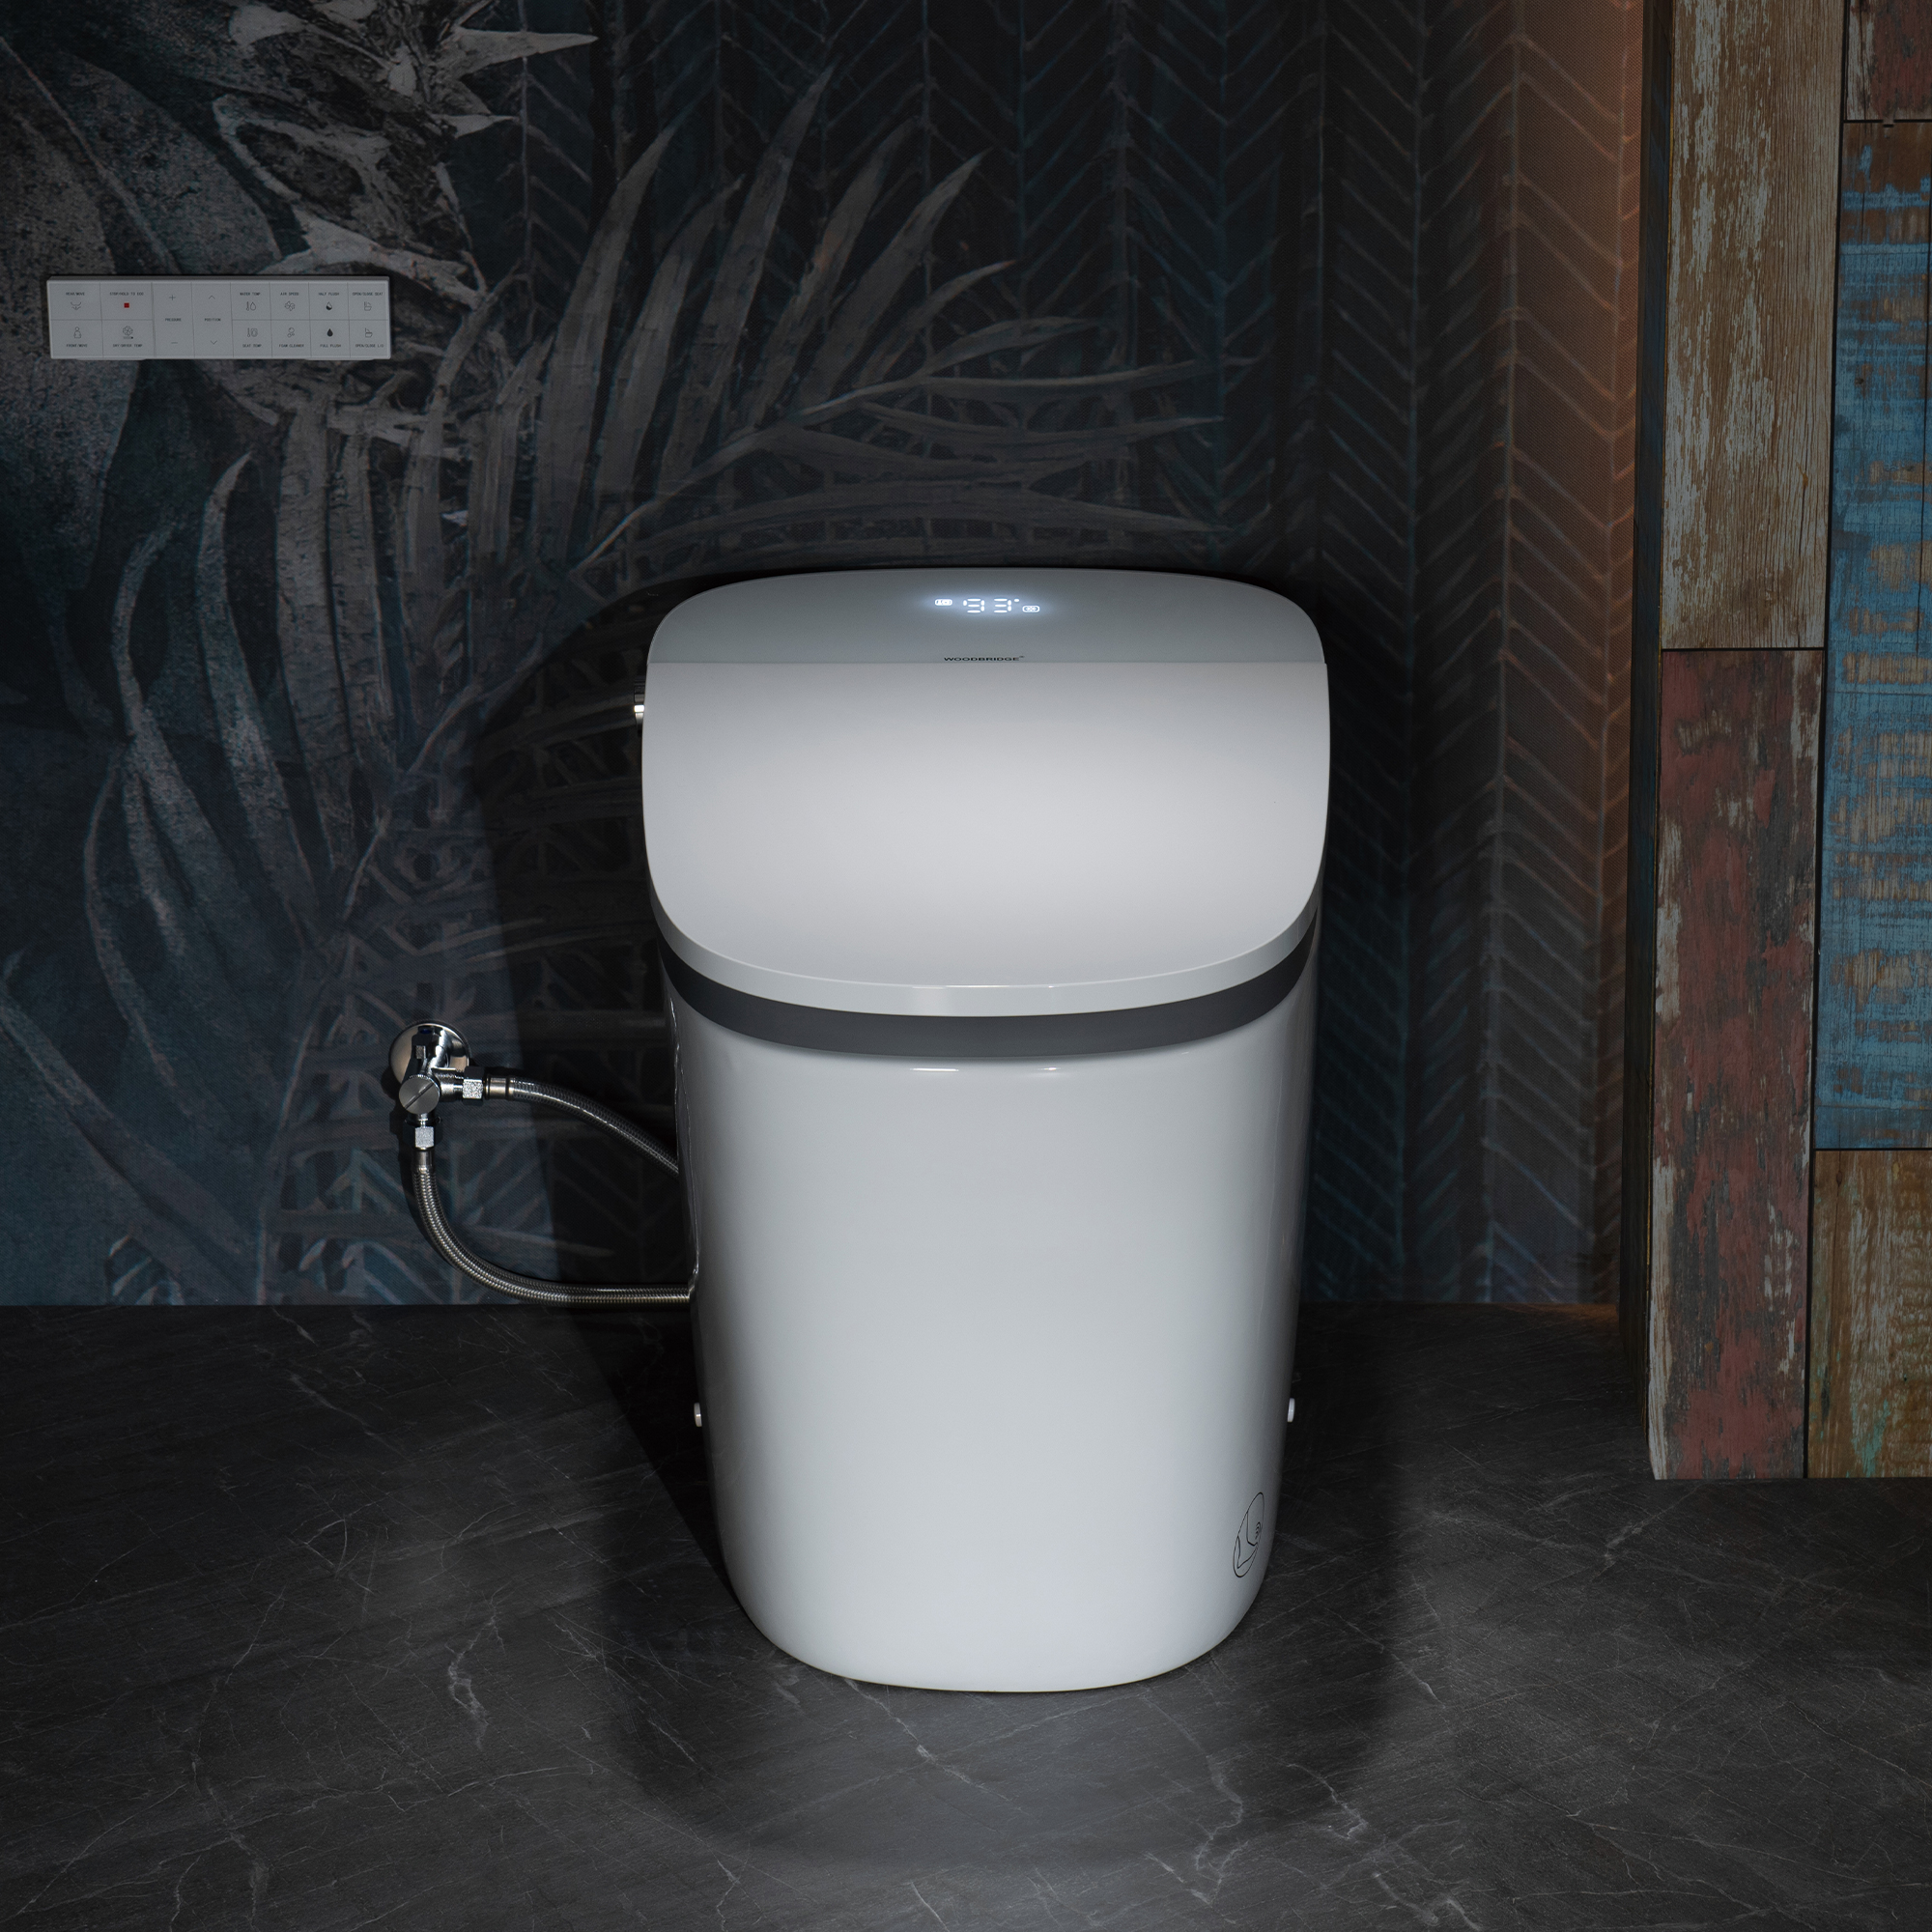 WOODBRIDGE B0931S Smart Bidet Toilet with 1.28 GPF Dual Flush Auto Open & Close, Foot Sensor Flush, Voice Control,1000 Gram Map Flushing Score, LED Display, Chair Height Design and Cleaning Foam Dispenser